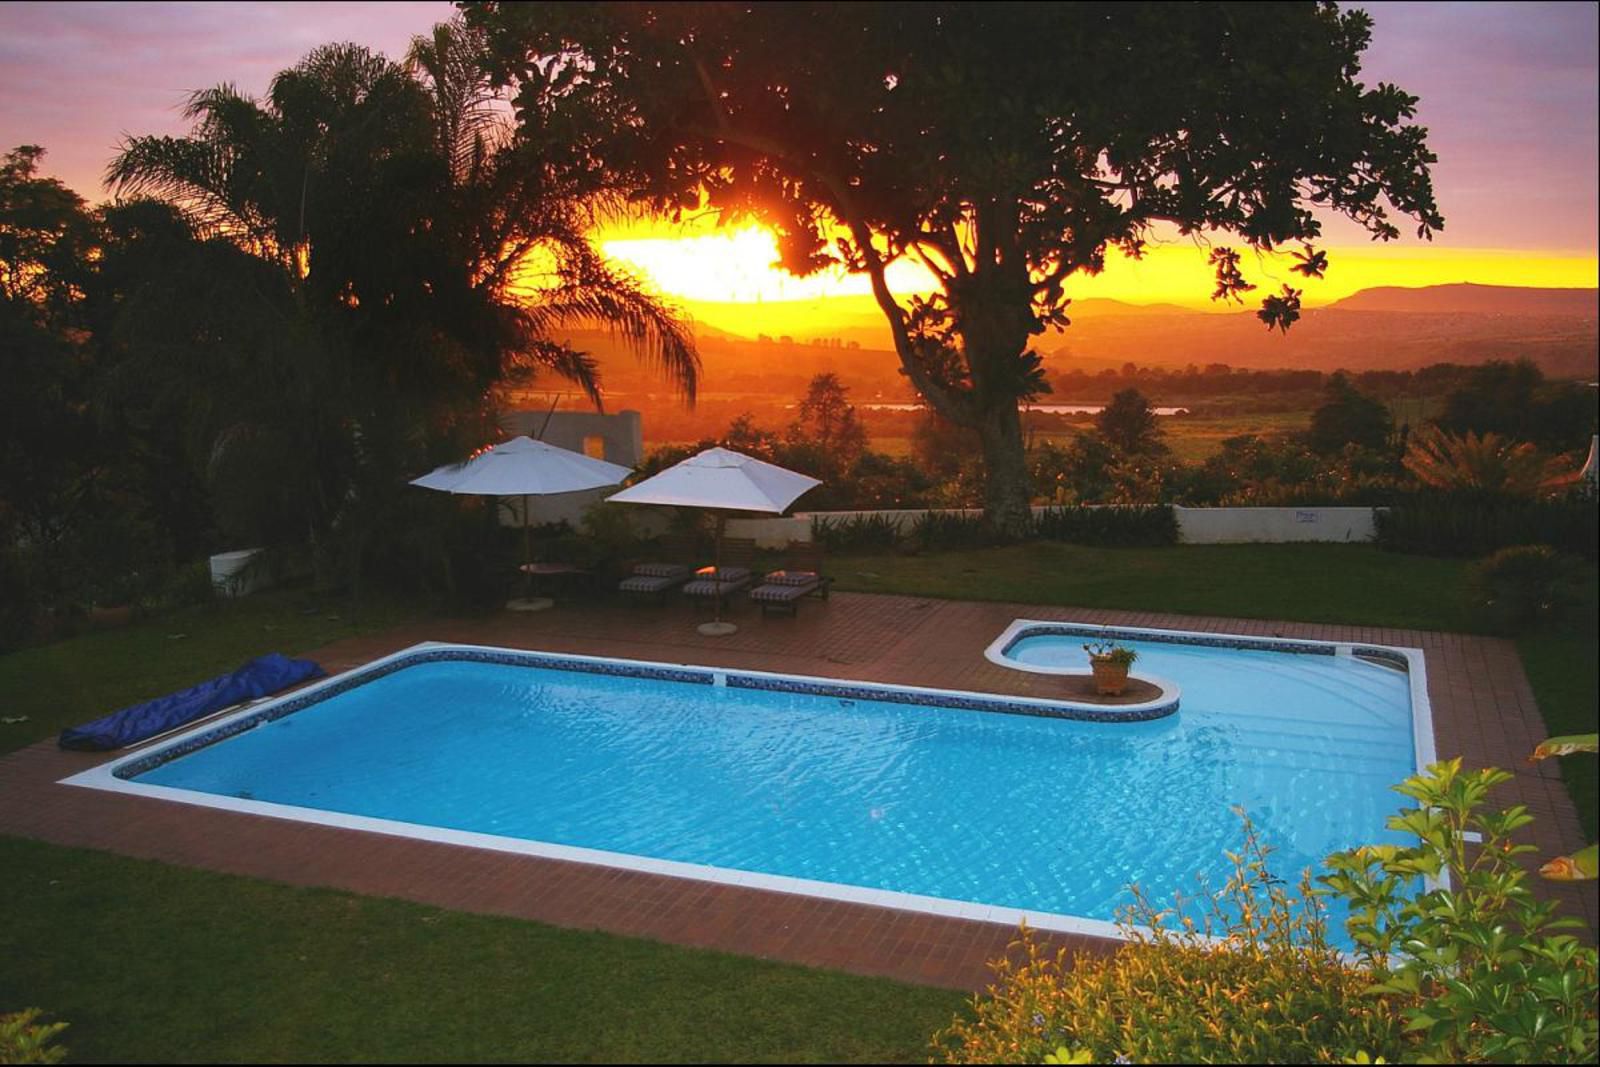 Plumbago Guest House Hazyview Mpumalanga South Africa Sky, Nature, Sunset, Swimming Pool